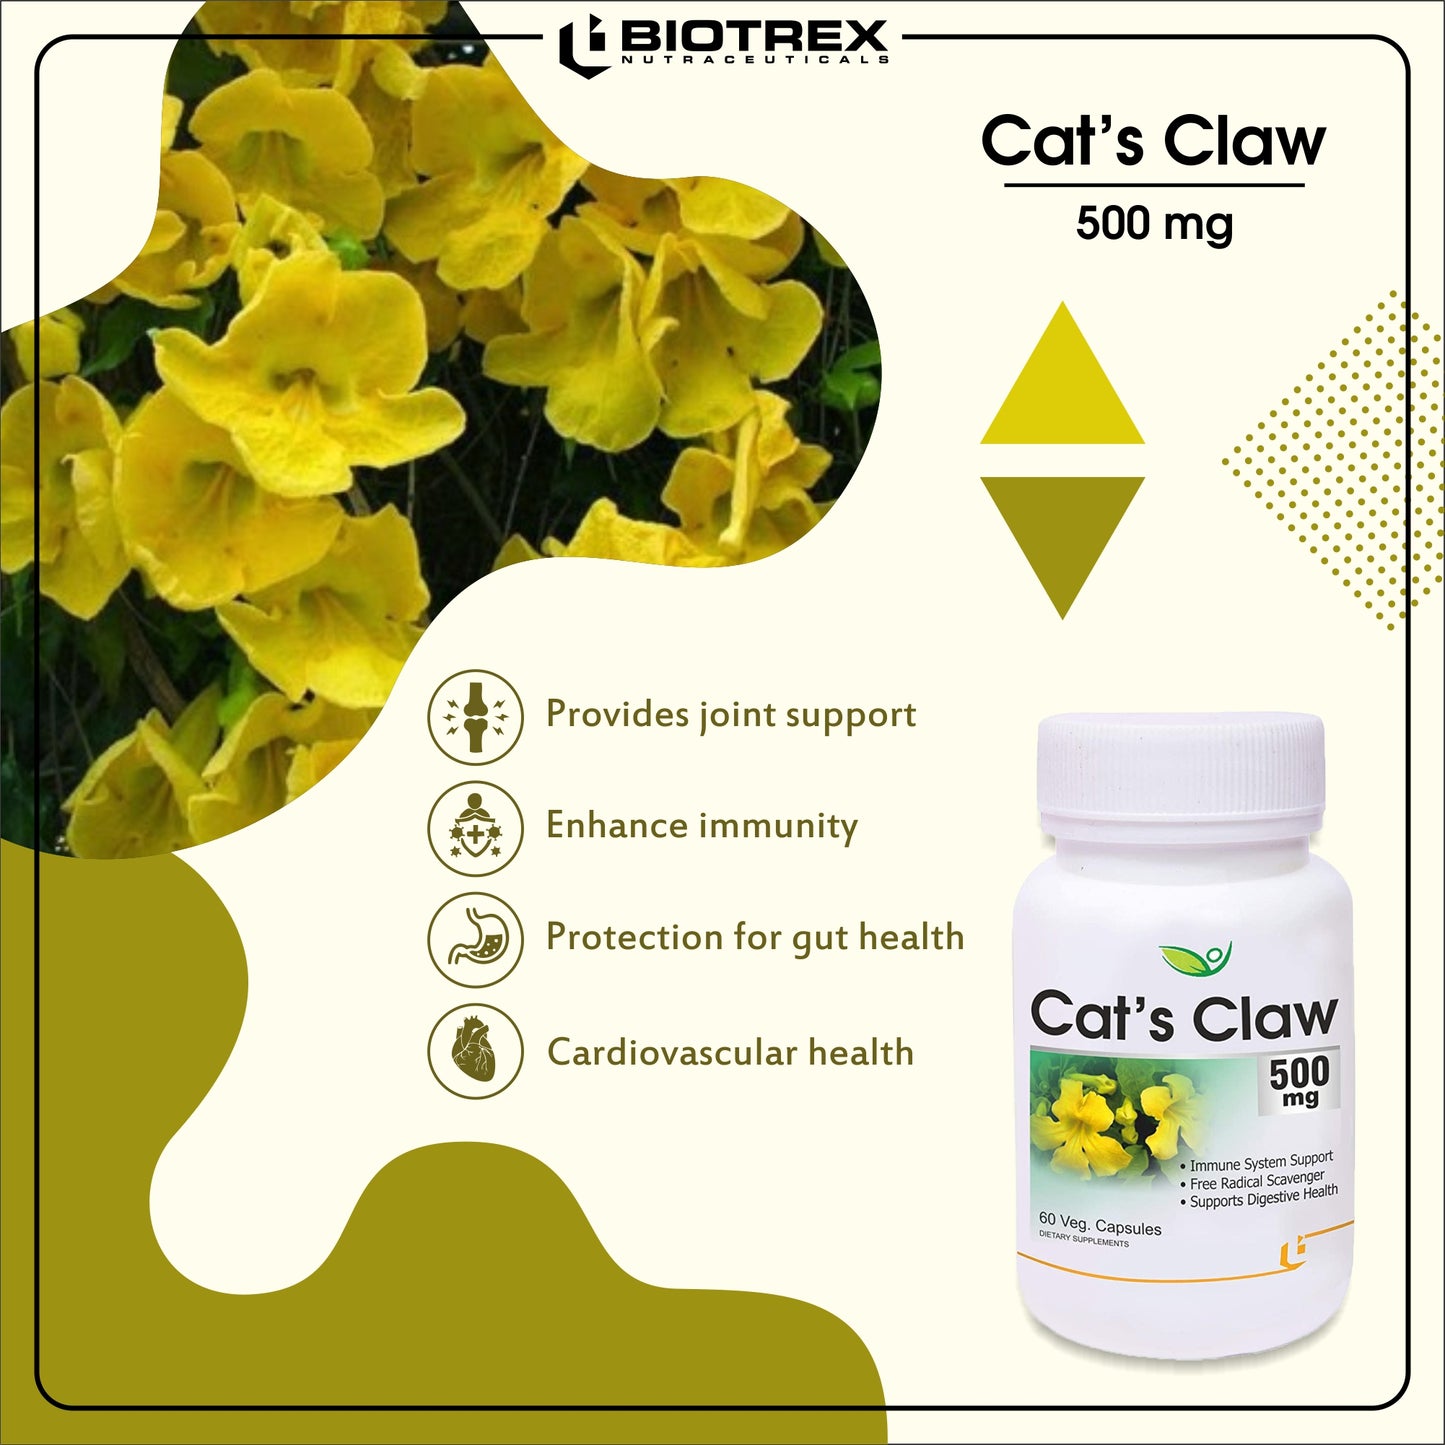 Biotrex Cat's Claw 500 mg - 60 Capsules